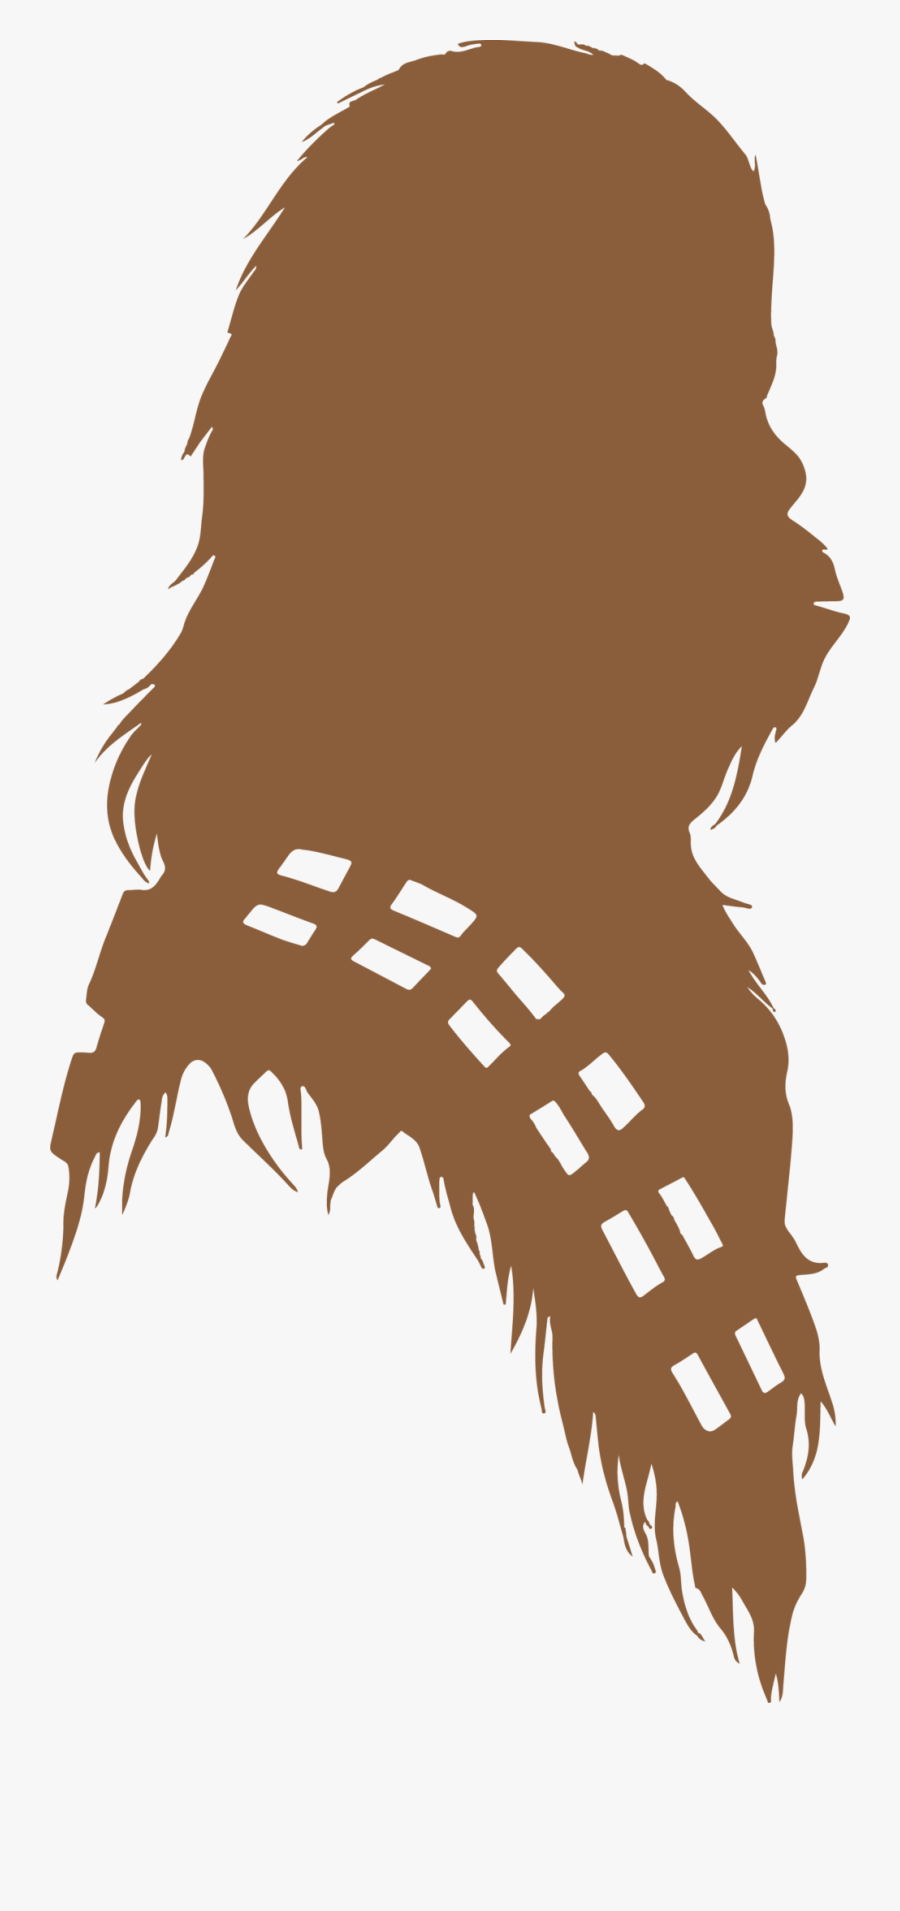 Download Chewbacca Silhouette - Star Wars Chewbacca Silhouette ...